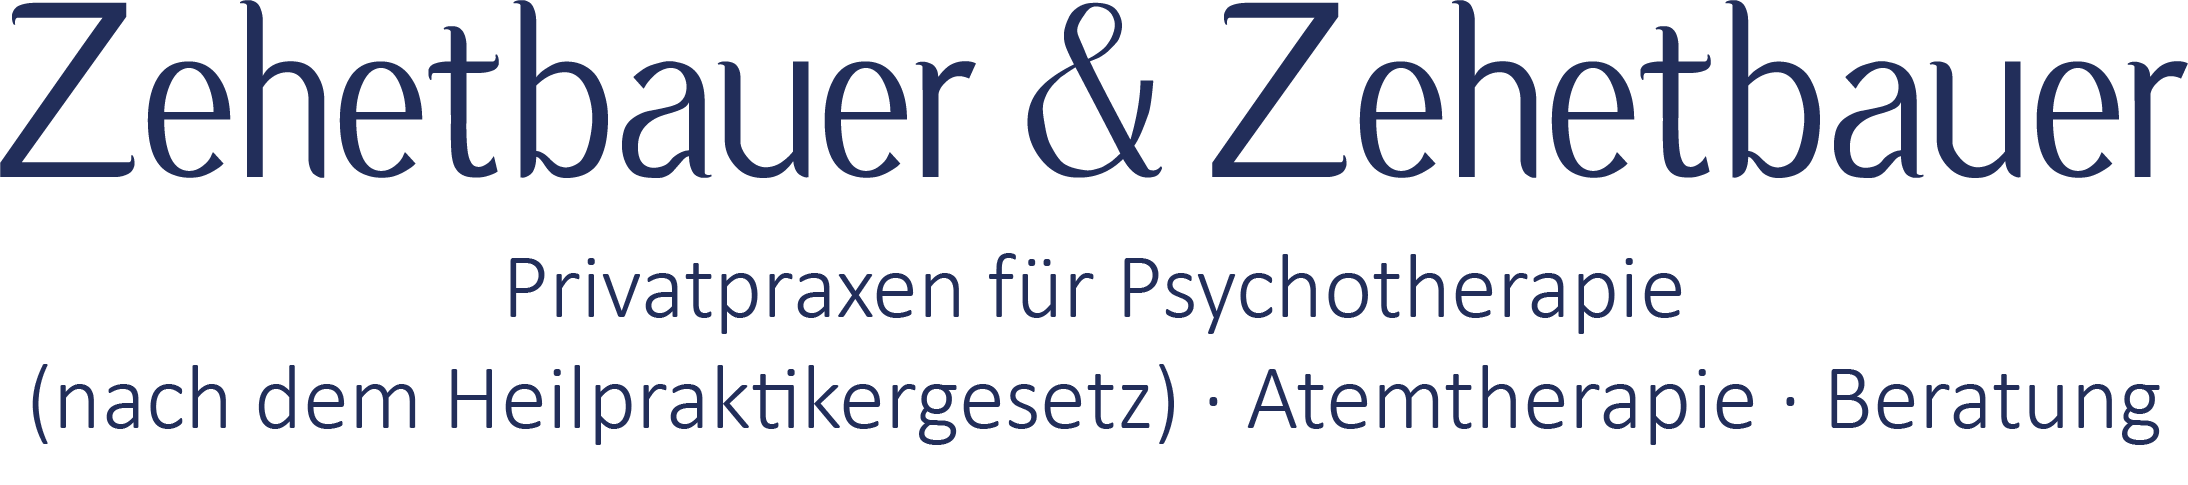 Psychotherapie und Beratung Zehetbauer